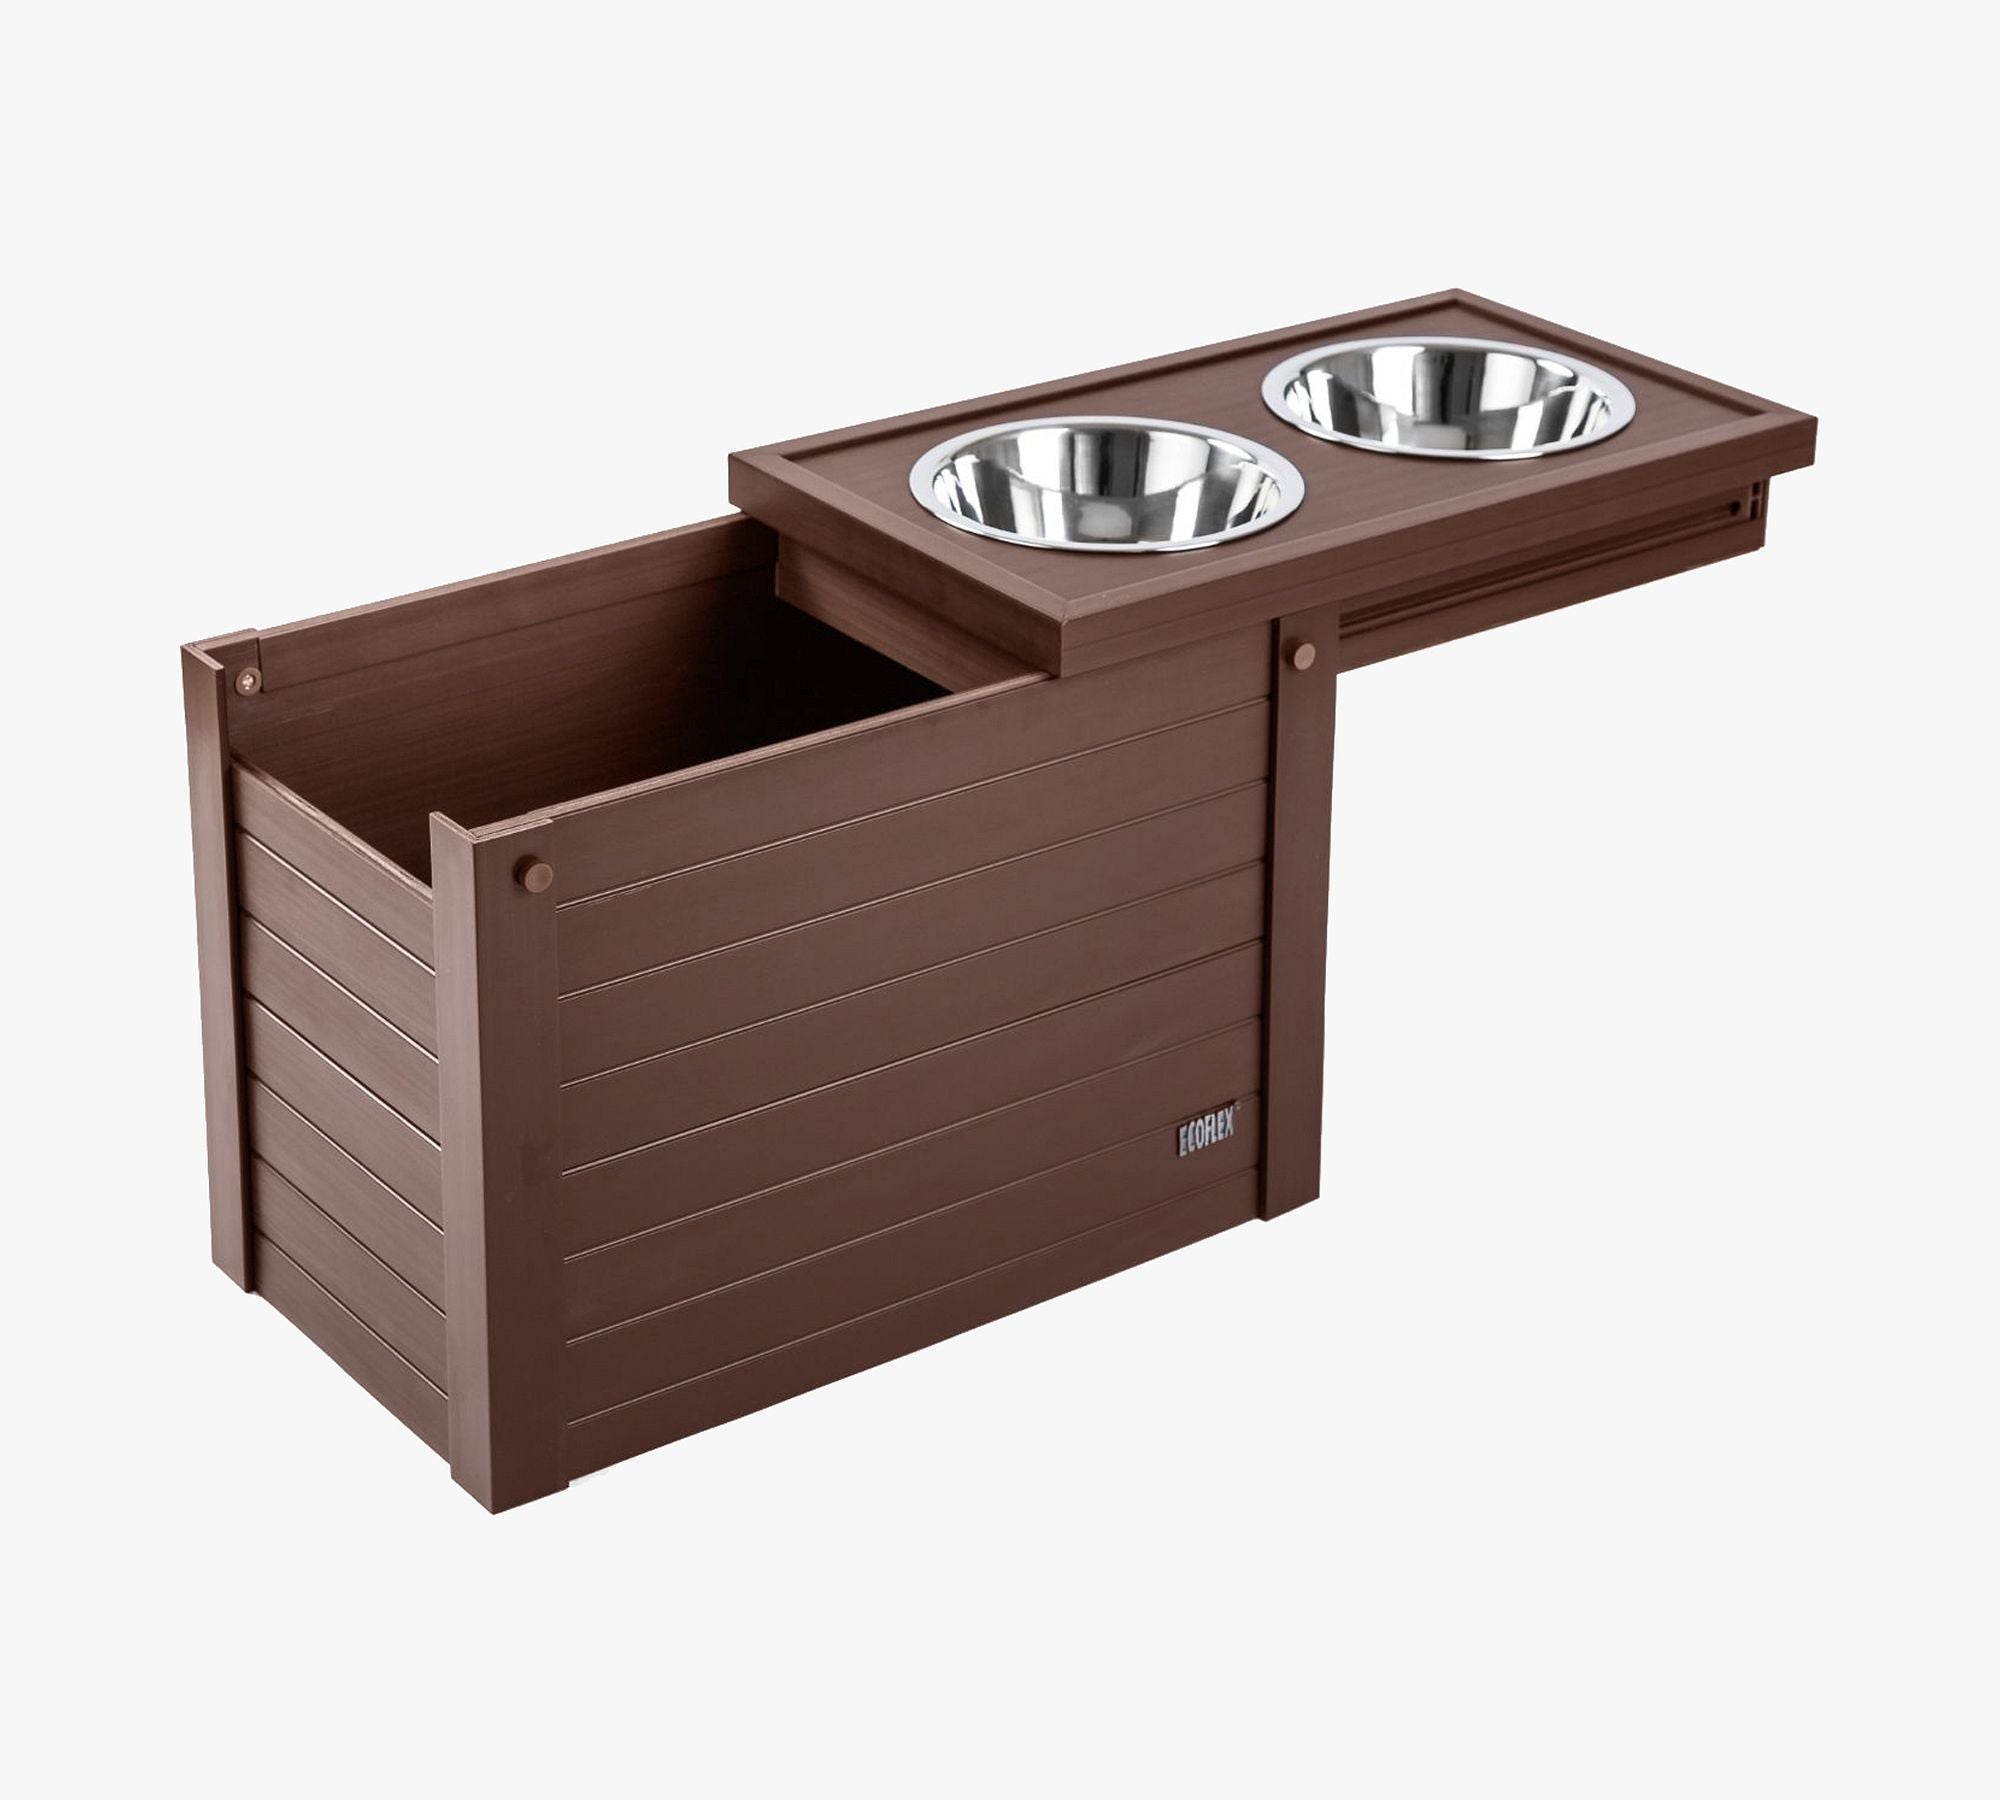 Dual Pet Bowls with Sliding Food Storage